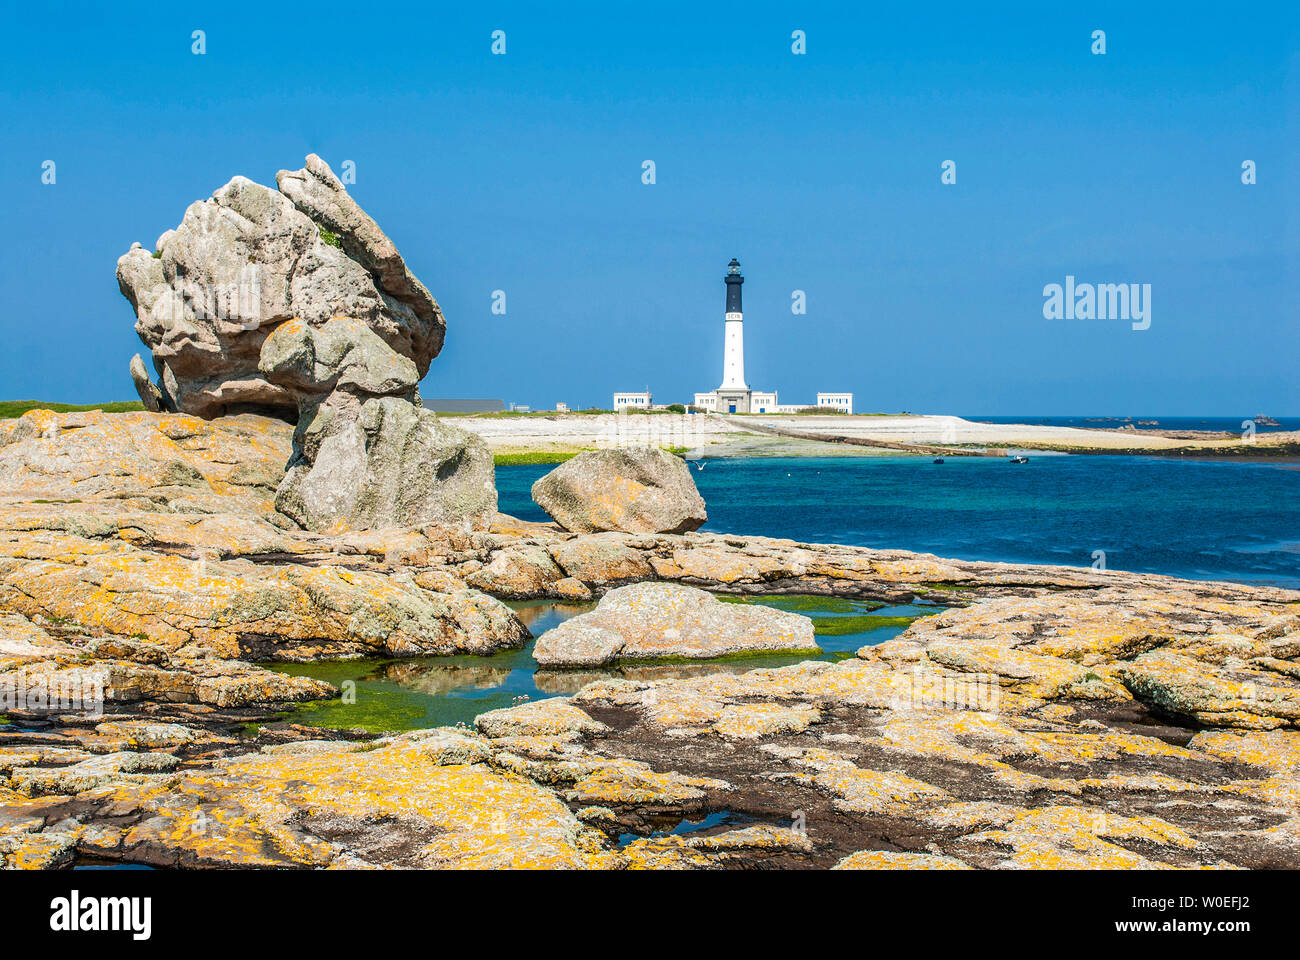 France, Brittany, Ile de Sein, lighthouse Stock Photo